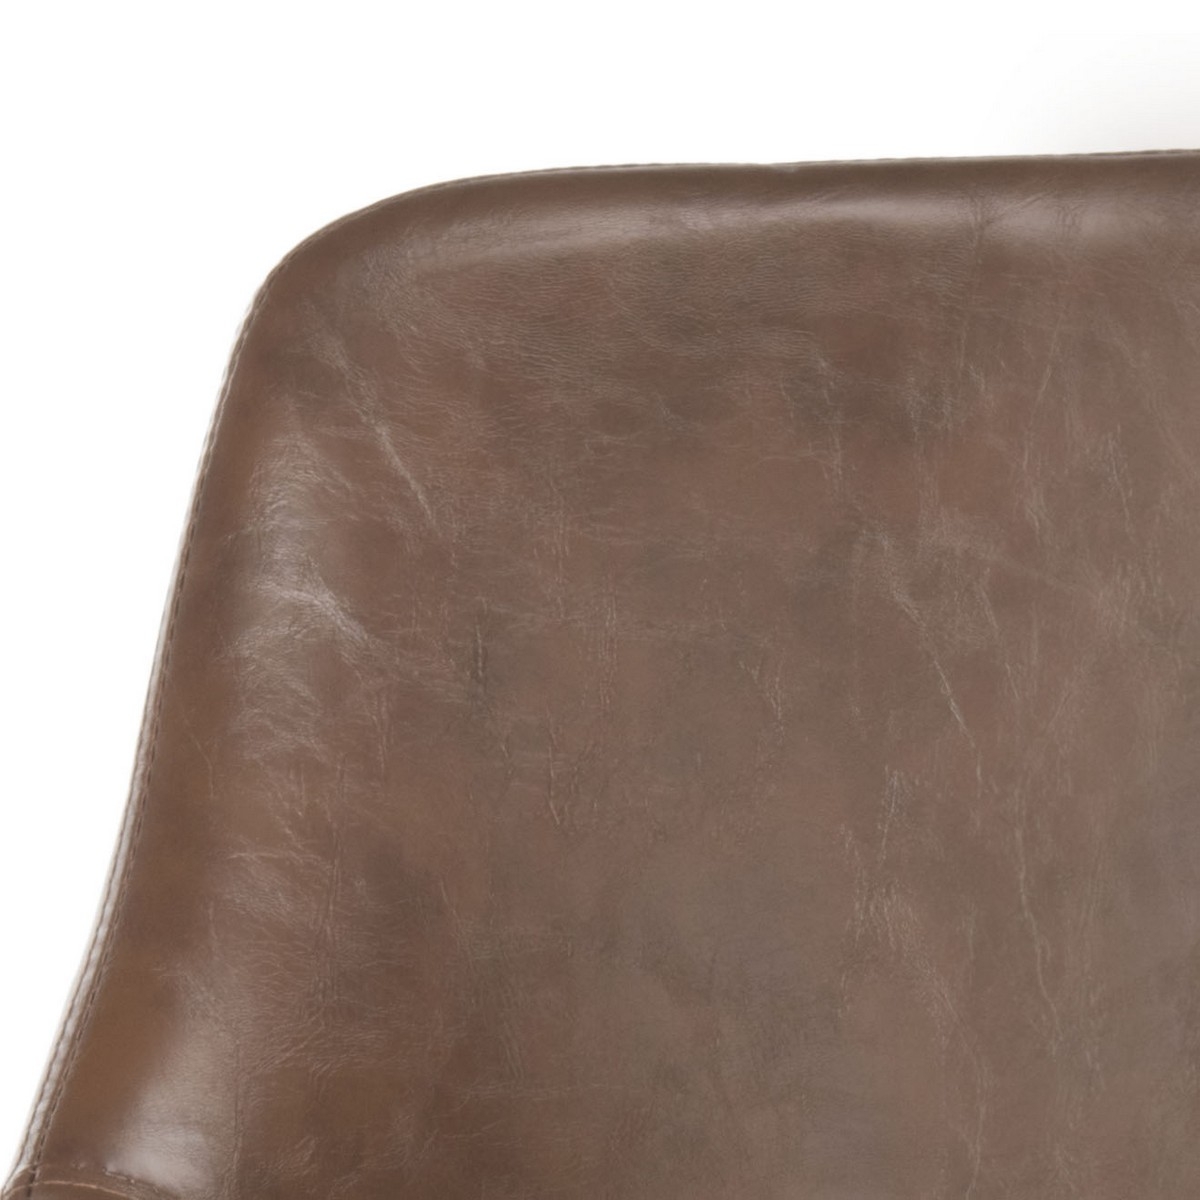 Cadence Swivel Office Chair - Brown/Chrome - Arlo Home - Image 7